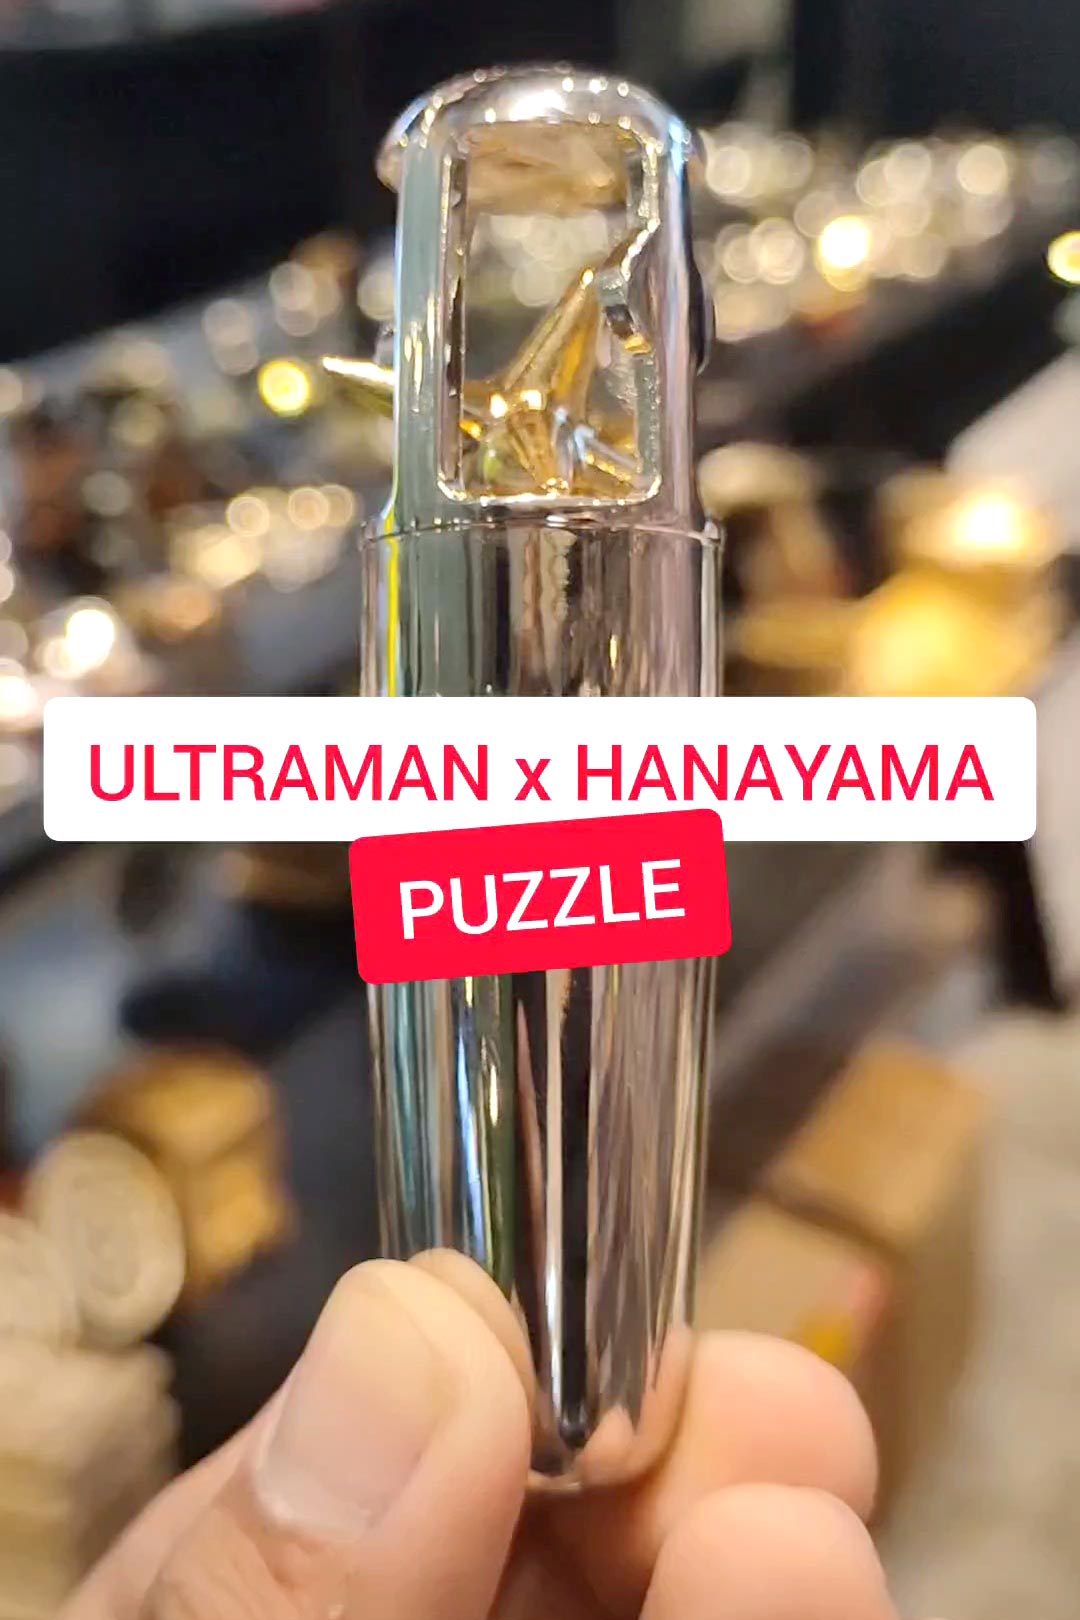 Ultraman x Hanayama Puzzle Collection!